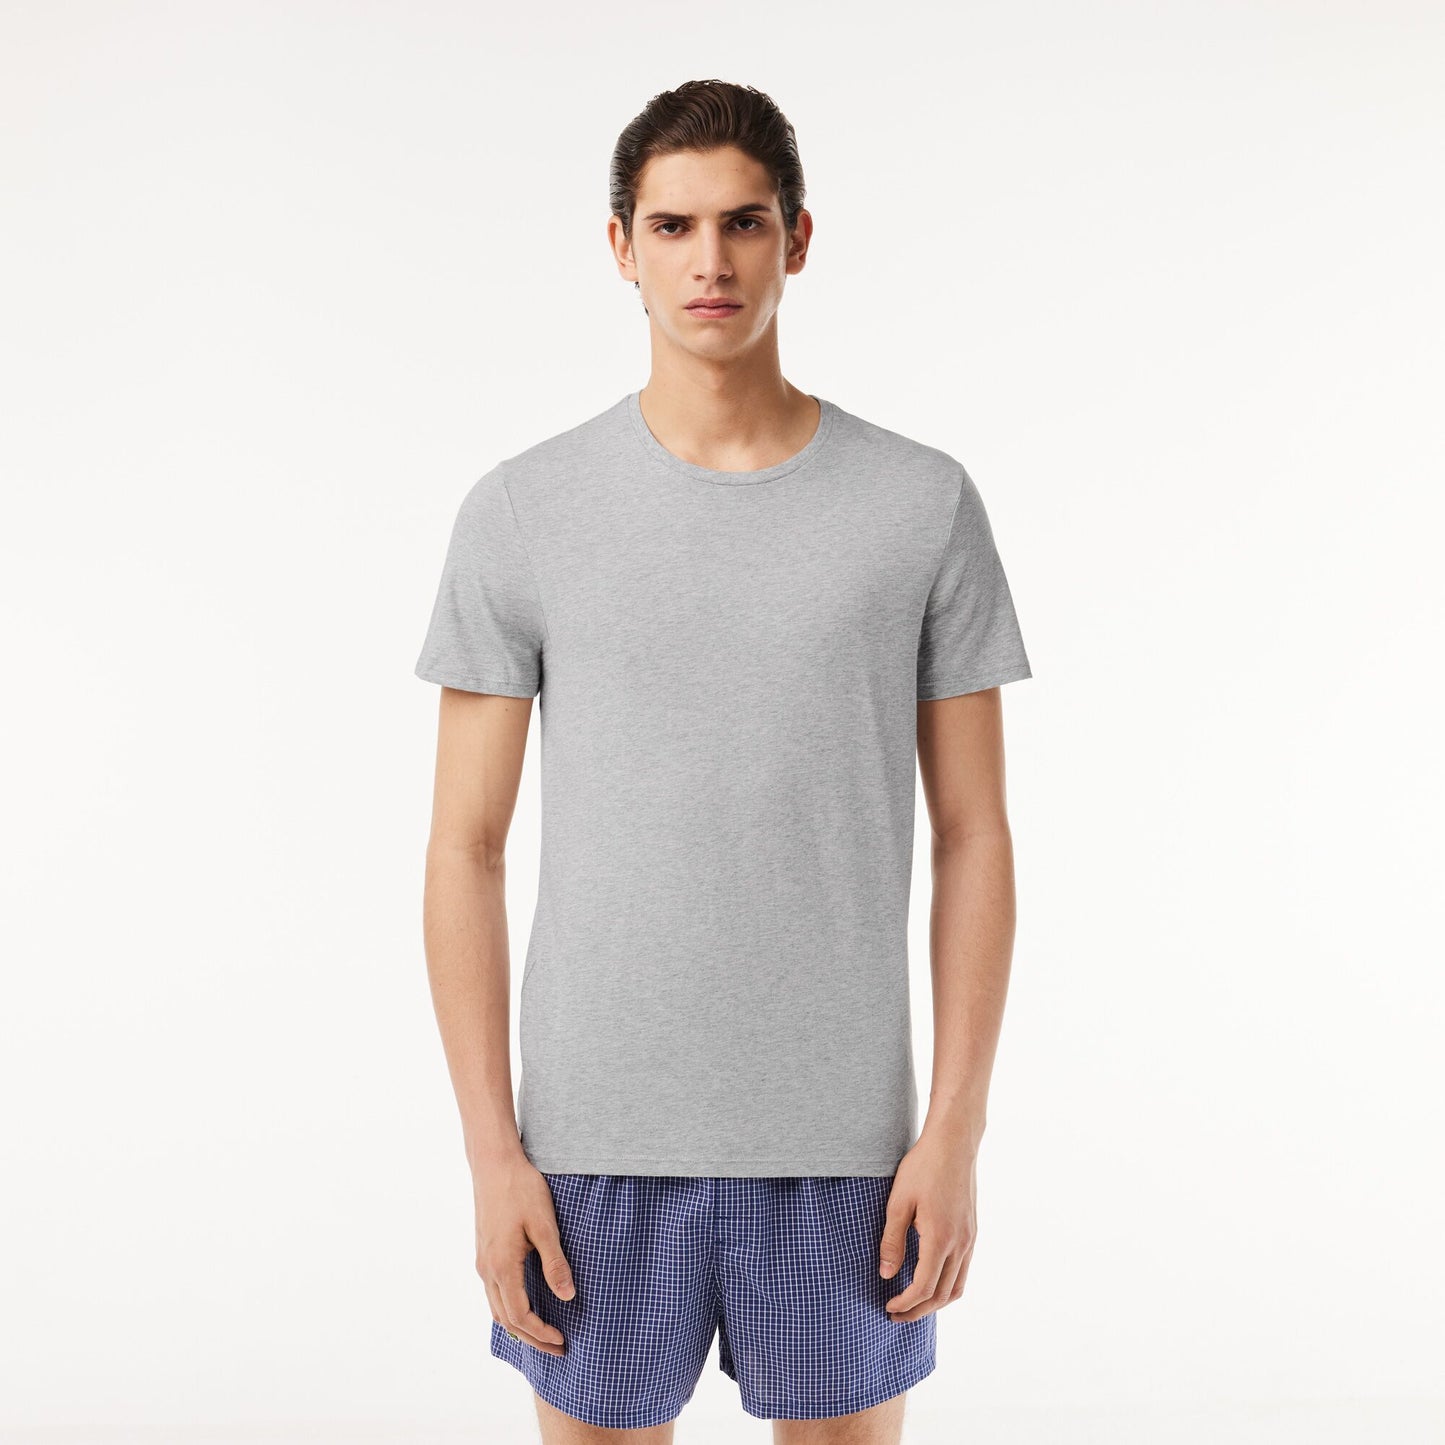 Men's Crew Neck Plain Cotton T-shirt Three-Pack - TH3451